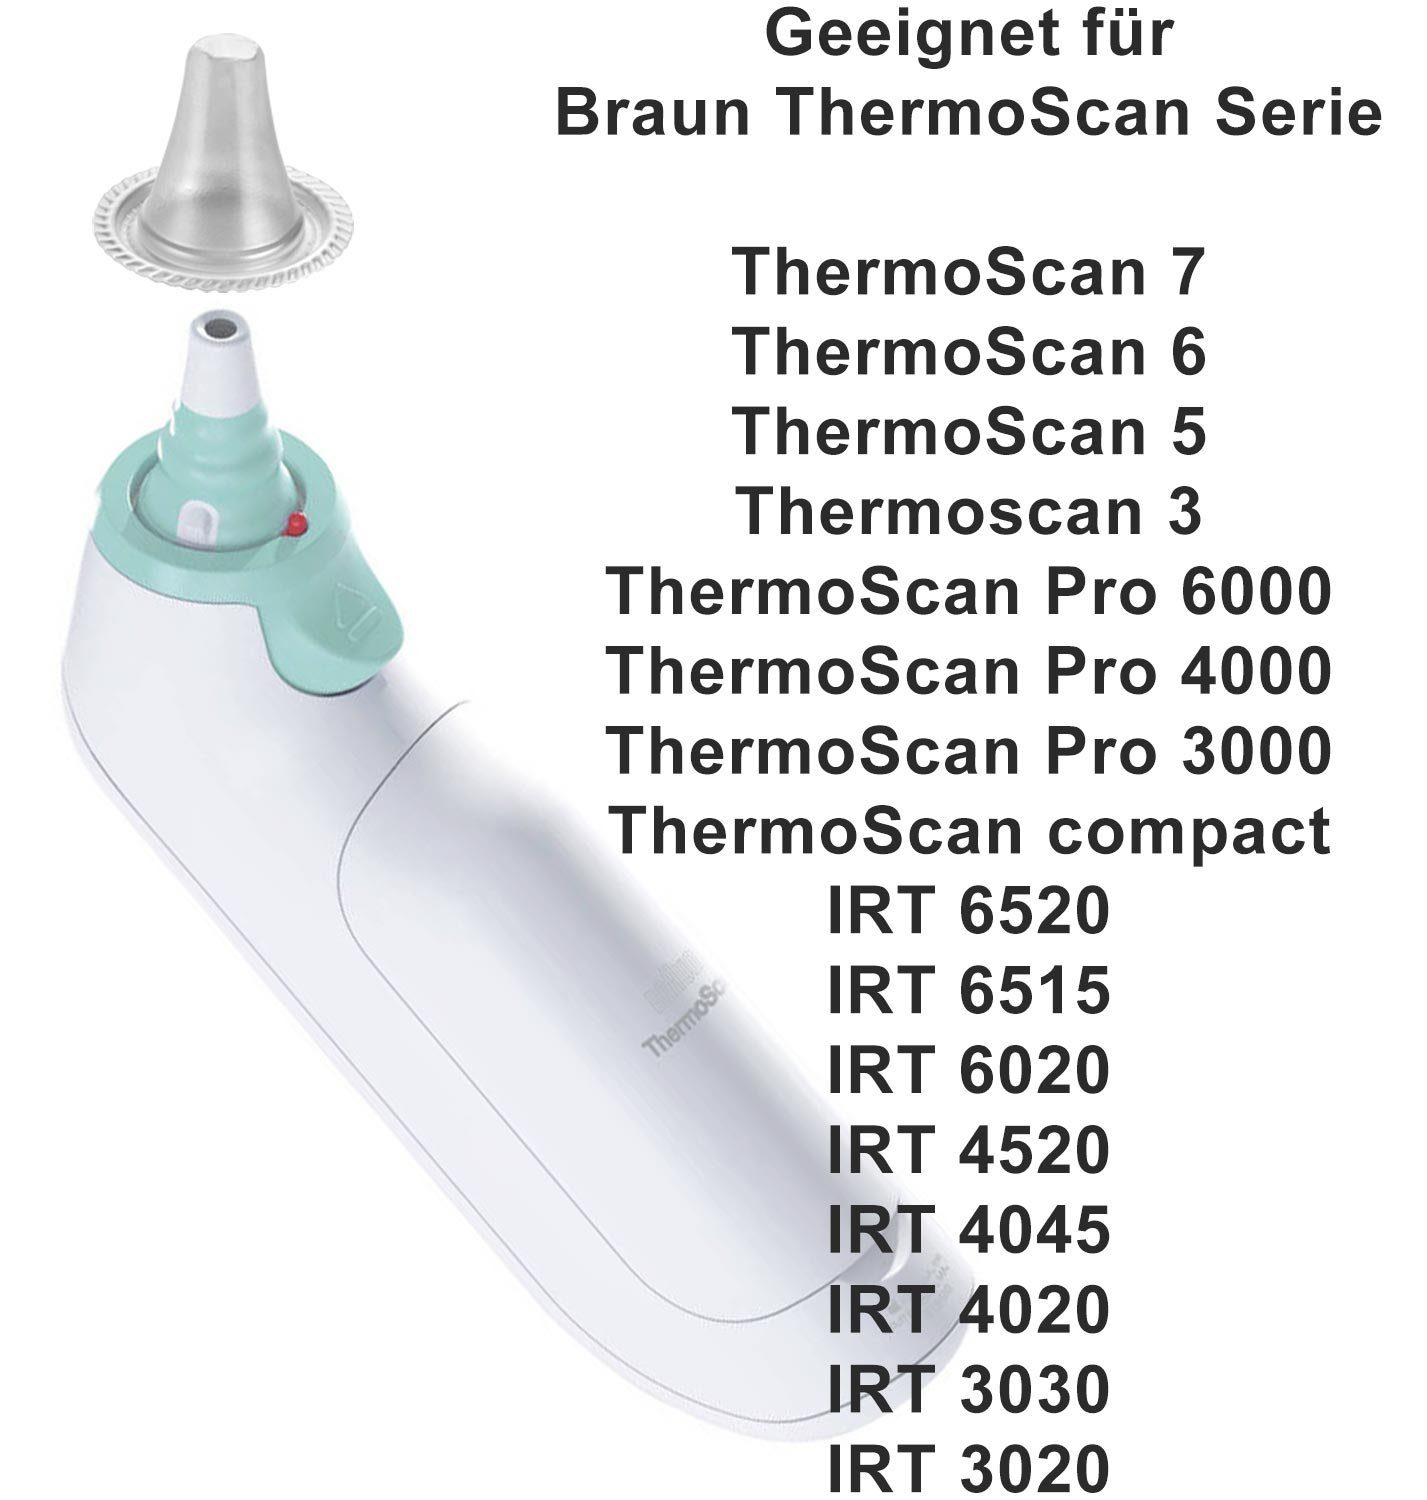 yayago Fieberthermometer Exeta Ersatzschutzkappen f Braun 200x Thermoscan 100x 40x 80x geeignet